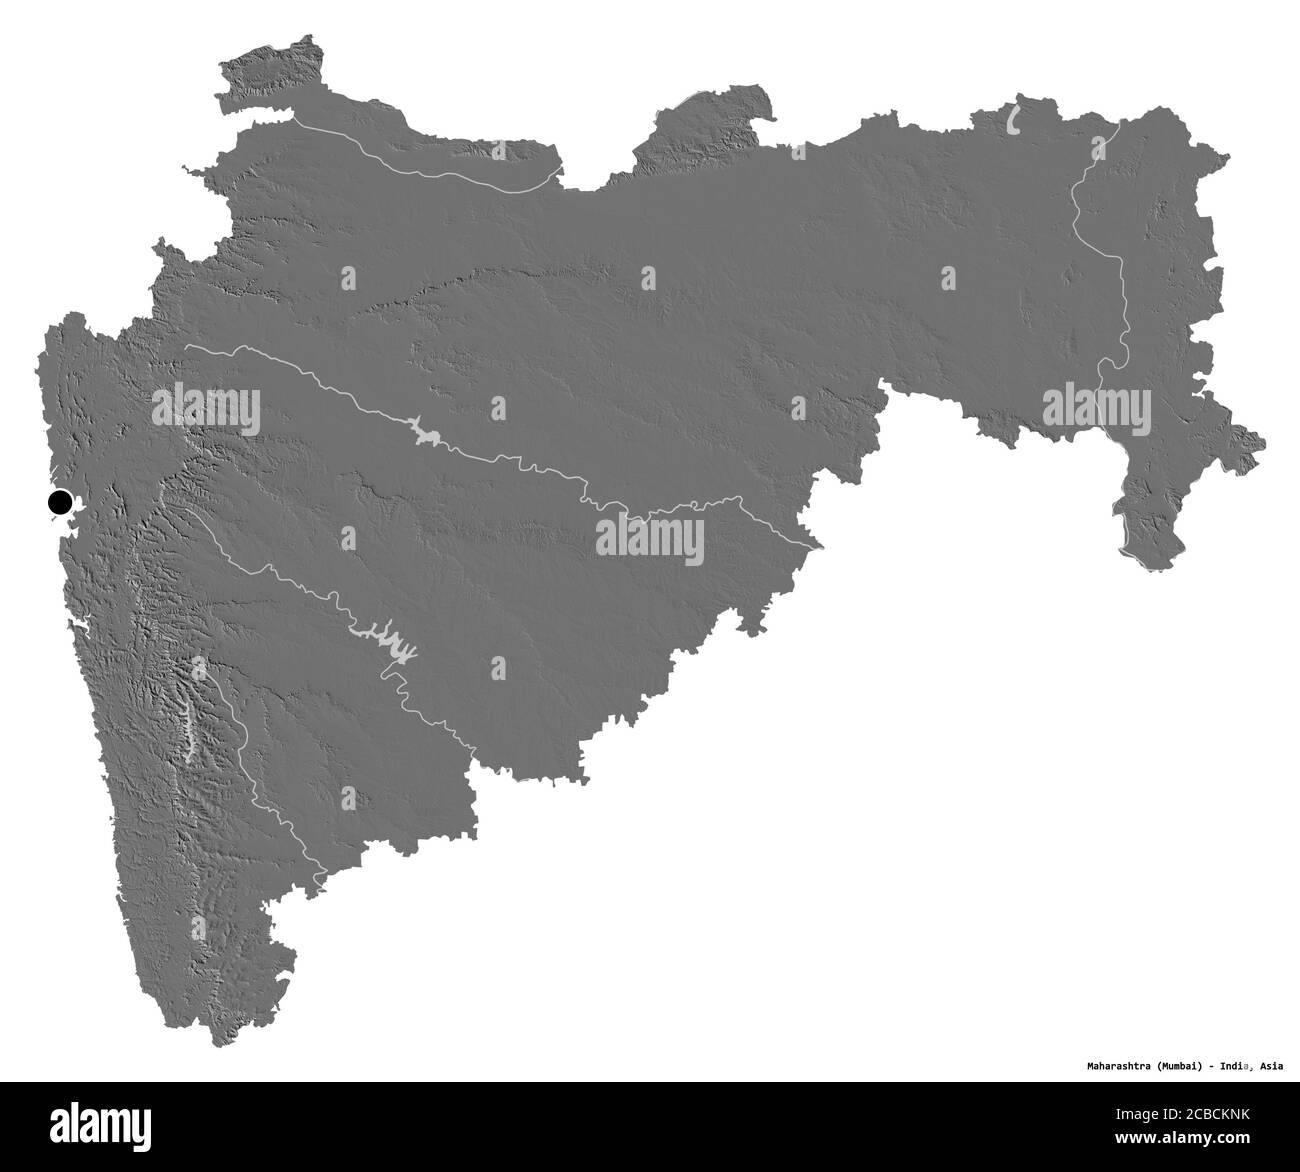 How to 𝐃𝐫𝐚𝐰 Map of 𝑴𝑨𝑯𝑨𝑹𝑨𝑺𝑯𝑻𝑹𝑨 | 𝗠𝗮𝗵𝗮𝗿𝗮𝘀𝗵𝘁𝗿𝗮 Ka  𝑵𝒂𝒌𝒔𝒉𝒂 | Maharashtra Map... | Map sketch, Map, Easy drawings